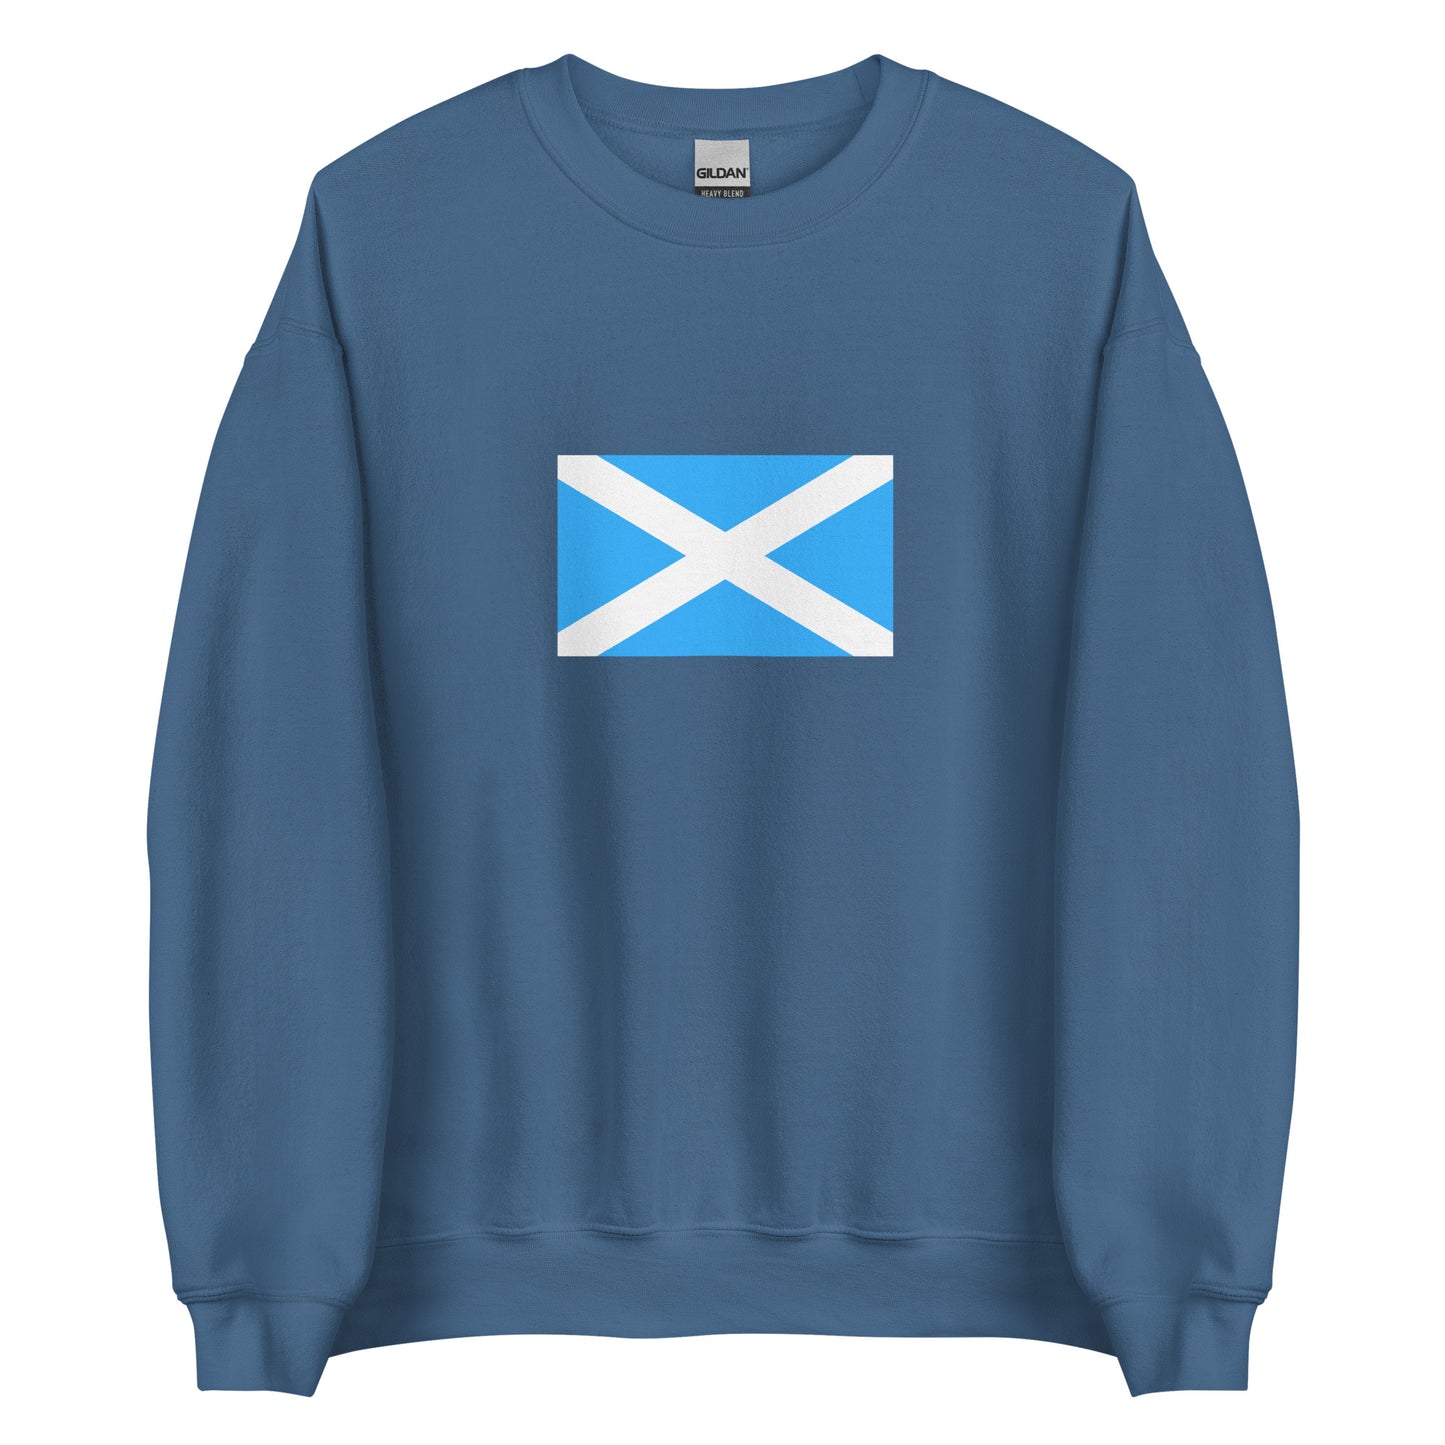 Scotland - Kingdom of Scotland (843 - 1707) | Historical Flag Unisex Sweatshirt